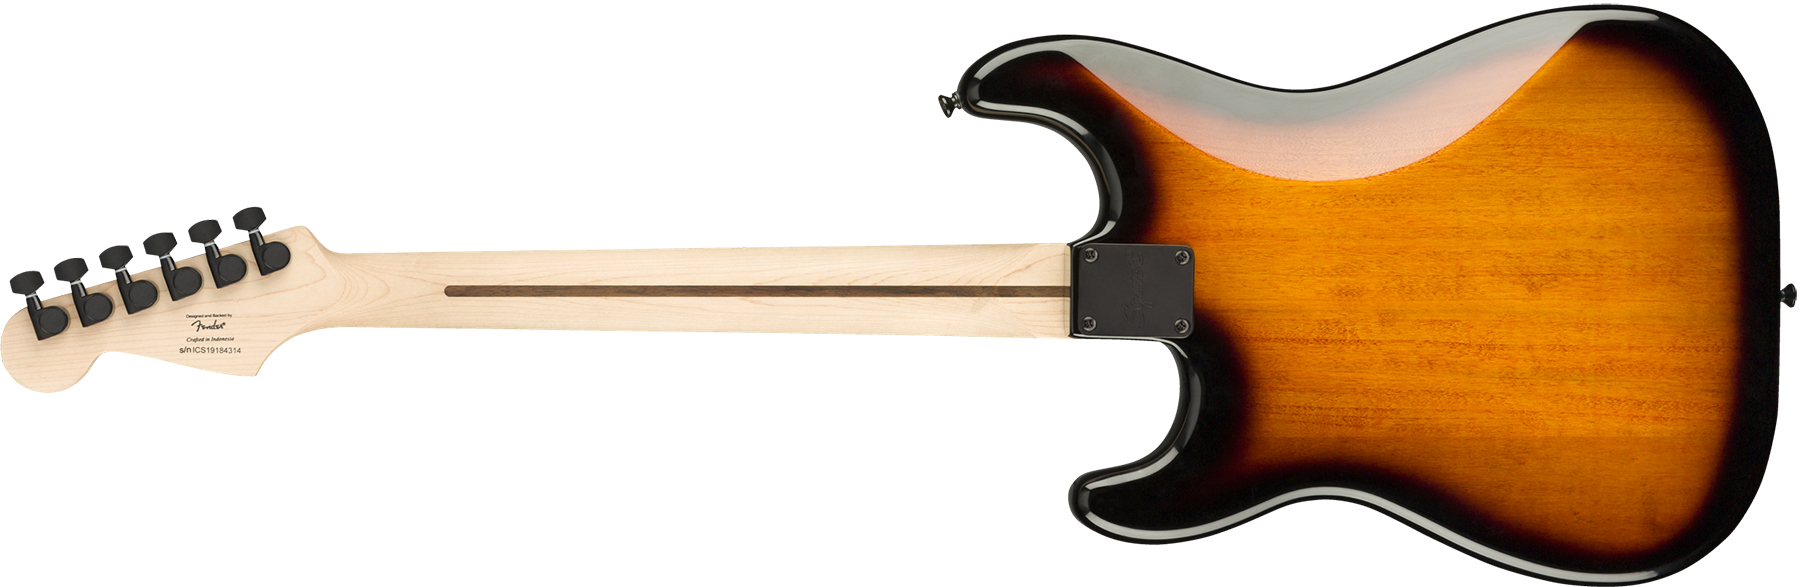 Squier Strat Bullet Fsr Ltd Hss Ht Lau - 2-color Sunburst - Str shape electric guitar - Variation 1